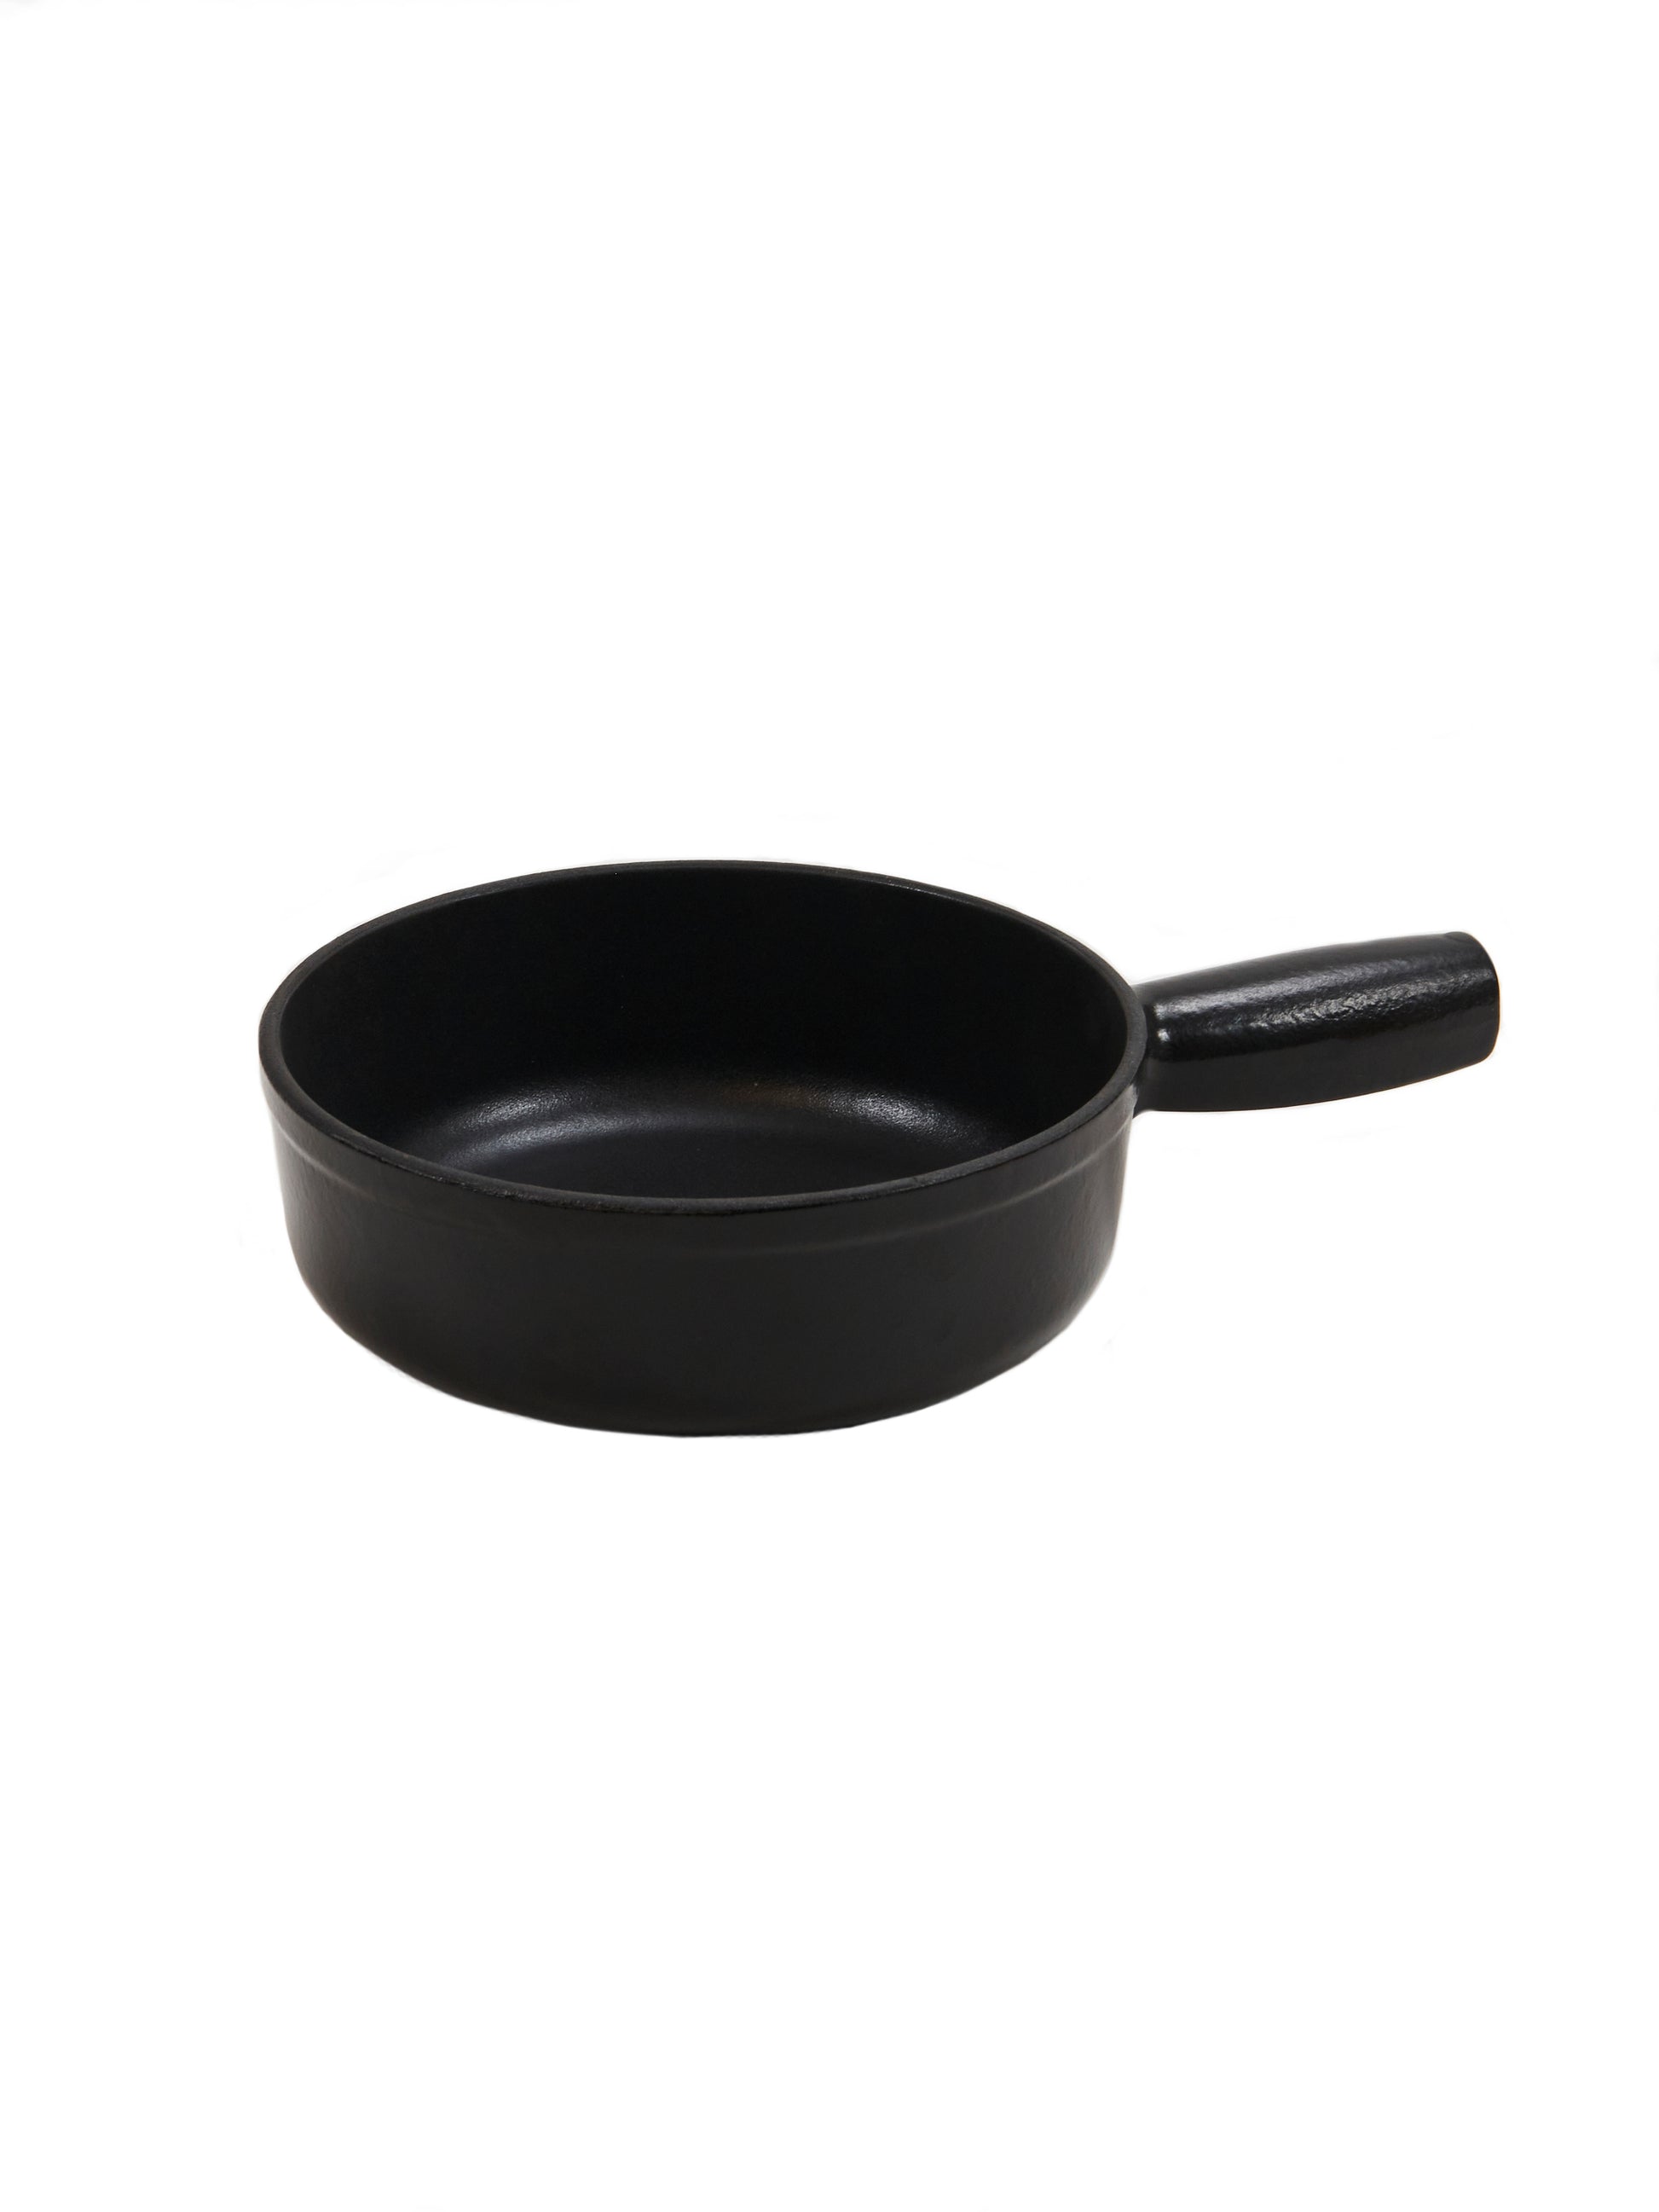 Swissmar Black Enamel Cast Iron Fondue Pot Weston Table